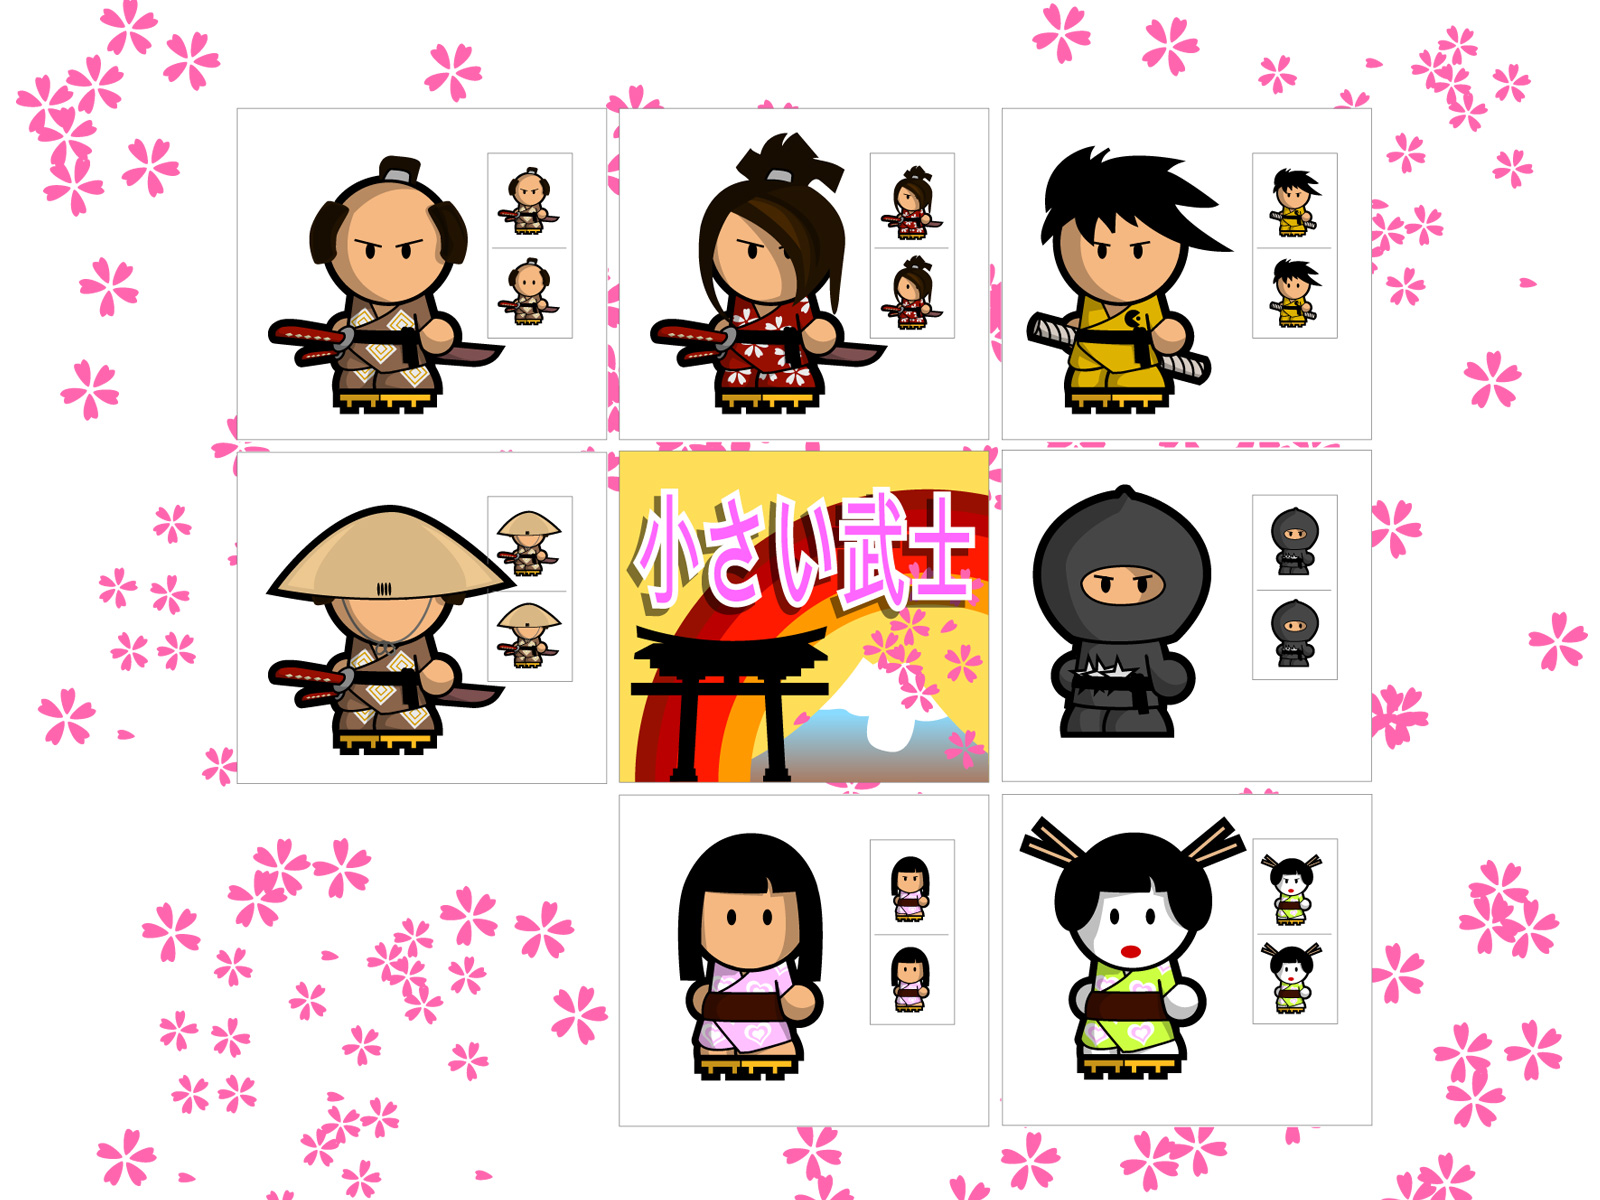 cute japanese characters wallpaper cute ninja wallpaper retro gaming